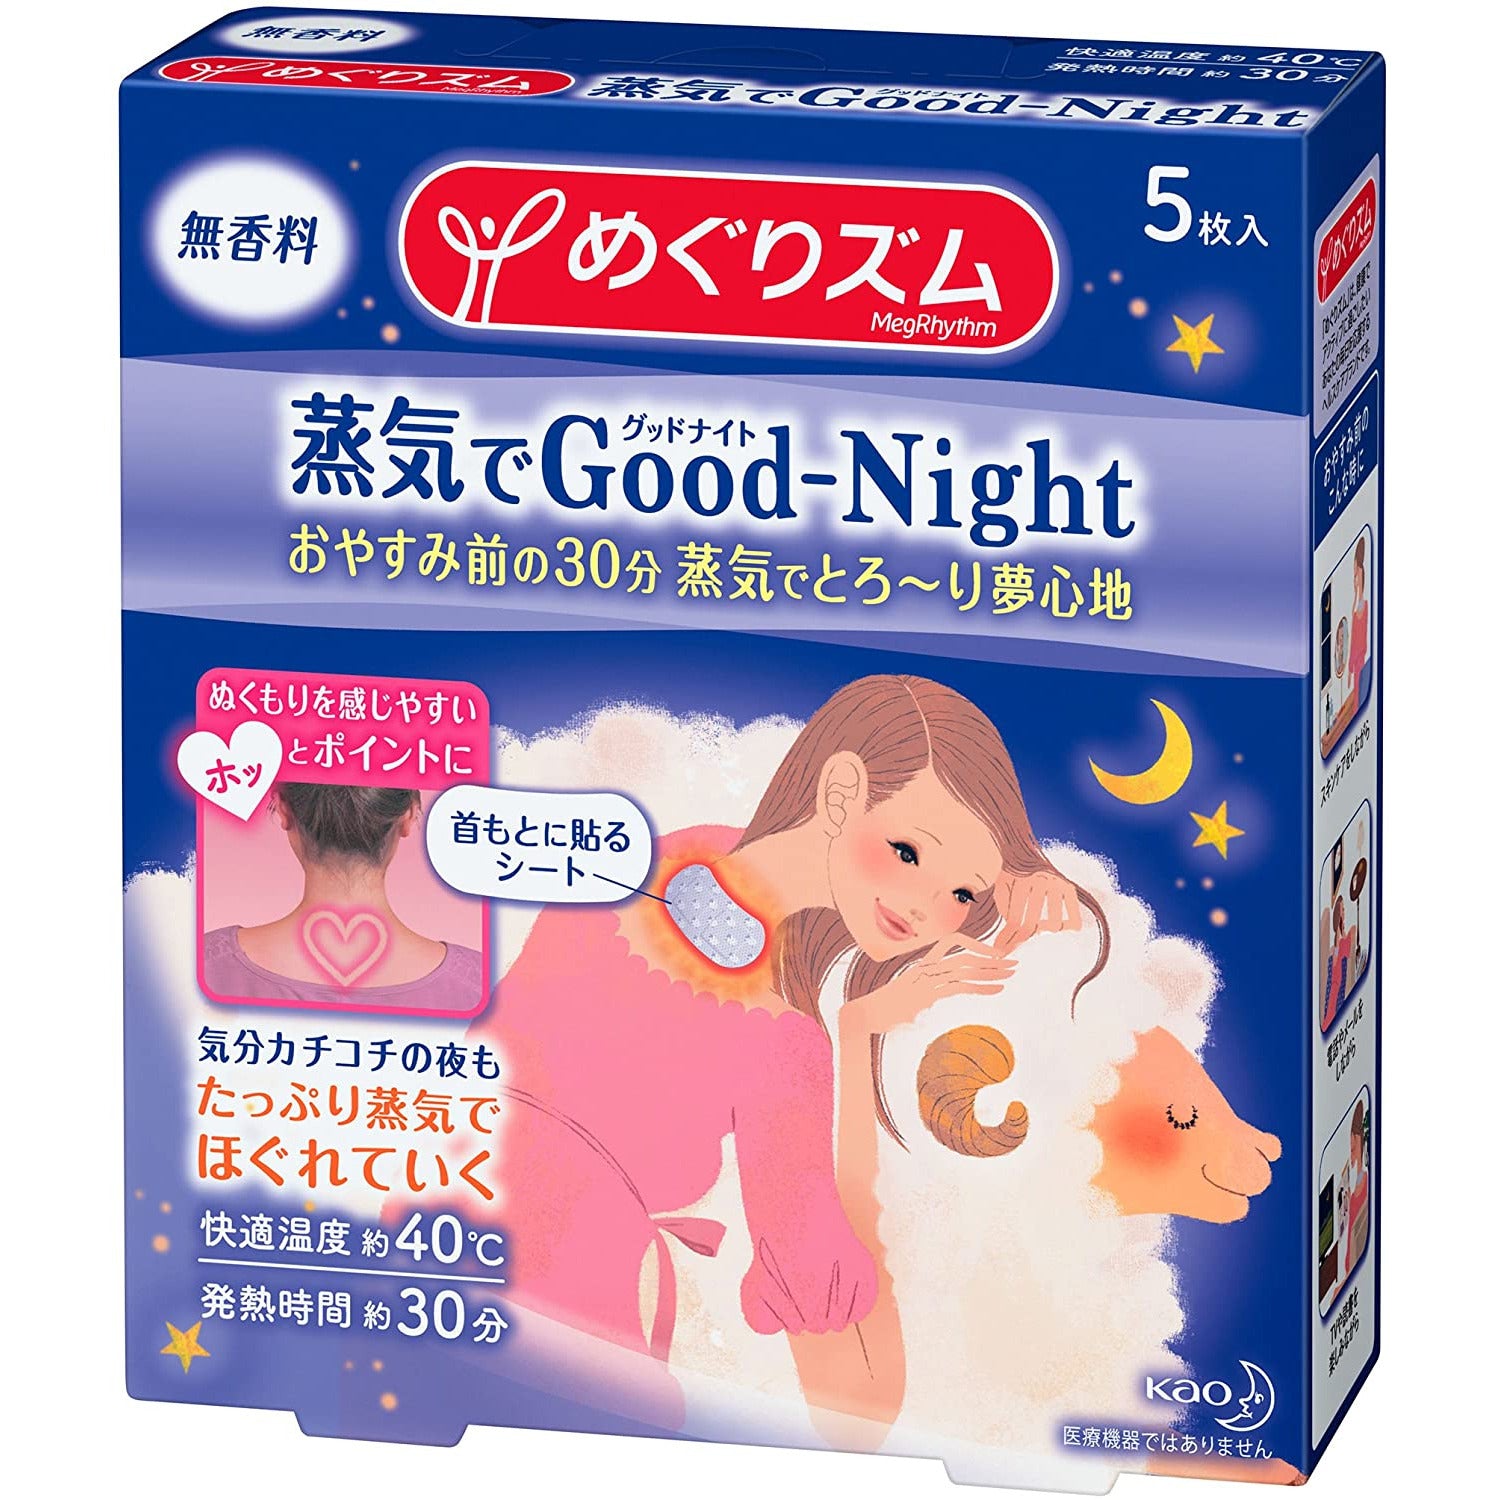 KAO Megurhythm Steam Sheet Good-Night 5 pieces, unscented / Sleep support